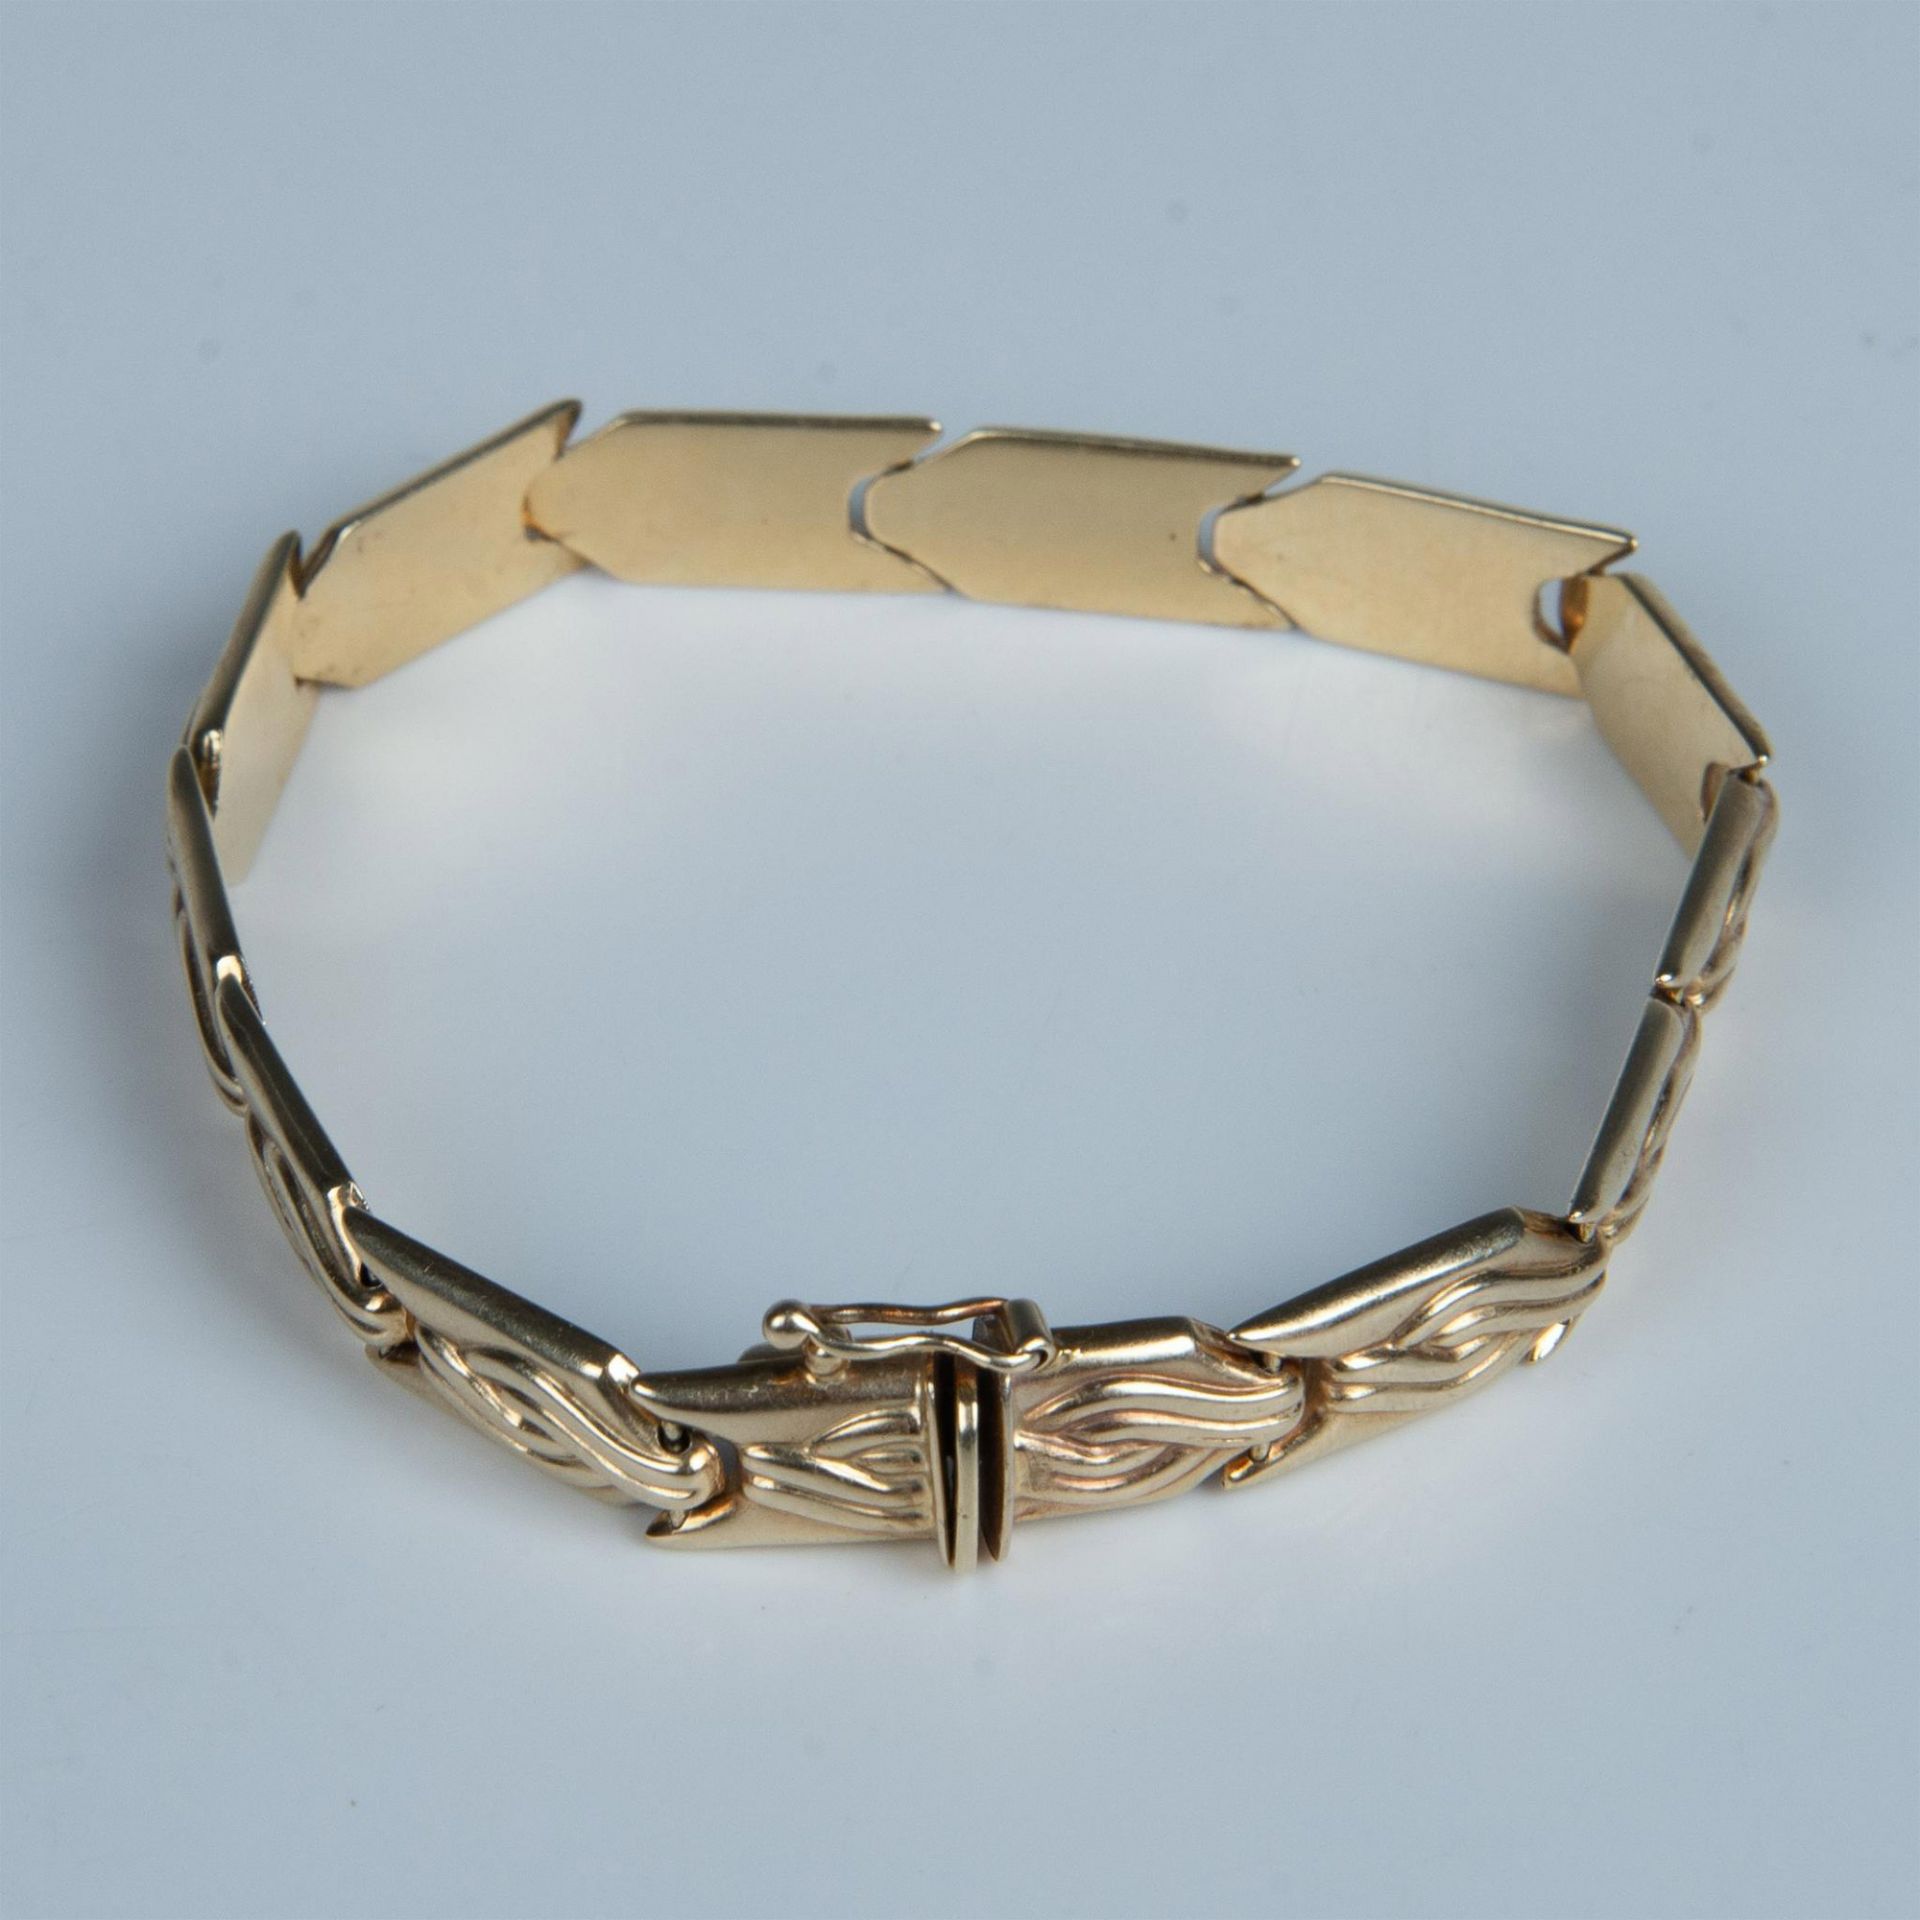 Vintage Italian 14K Yellow Gold Bracelet - Image 2 of 3